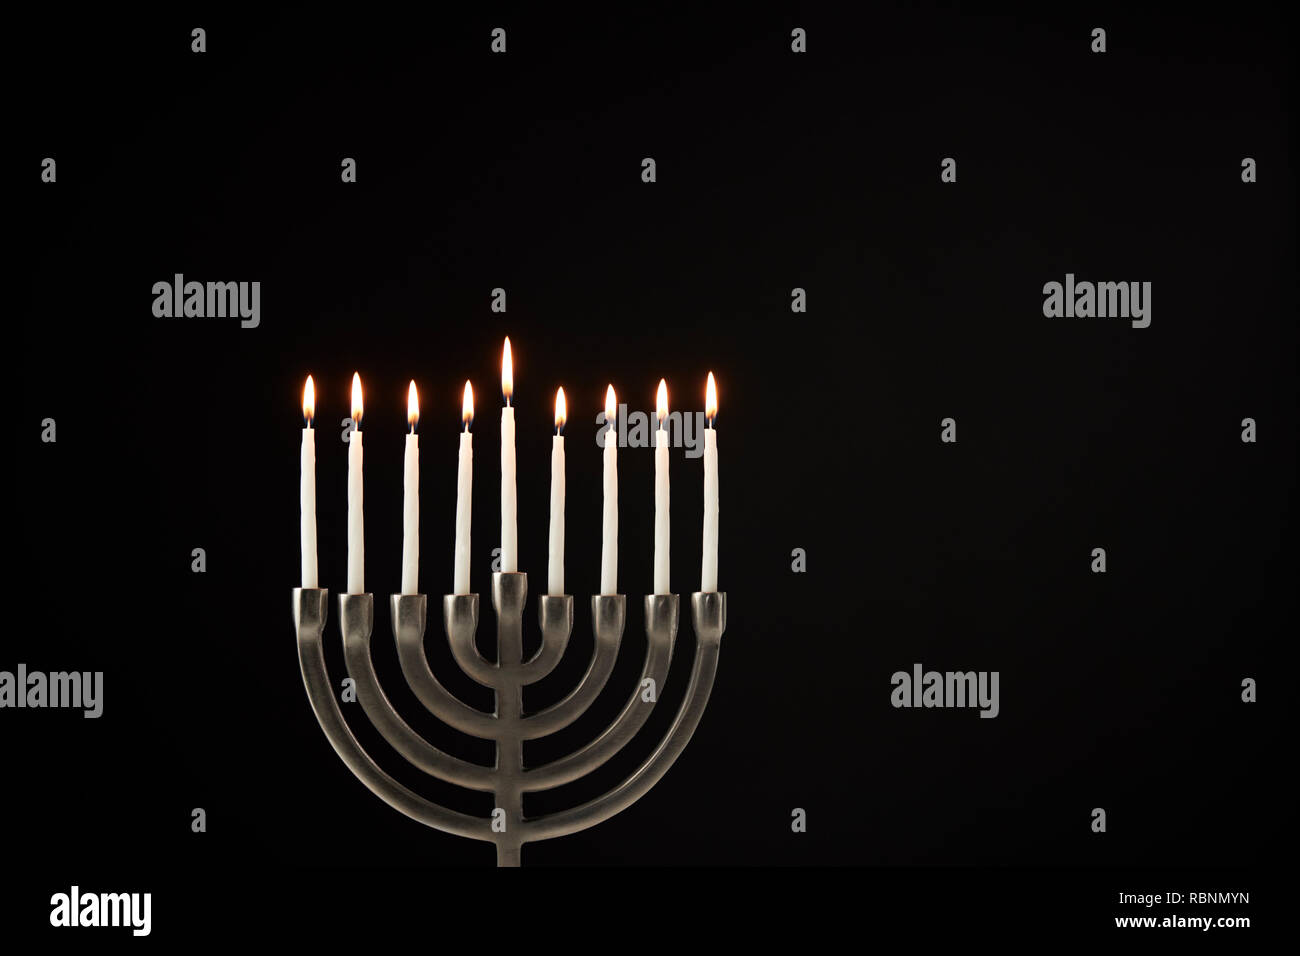 Lit Candles On Metal Hanukkah Menorah Against Black Studio Background Stock Photo